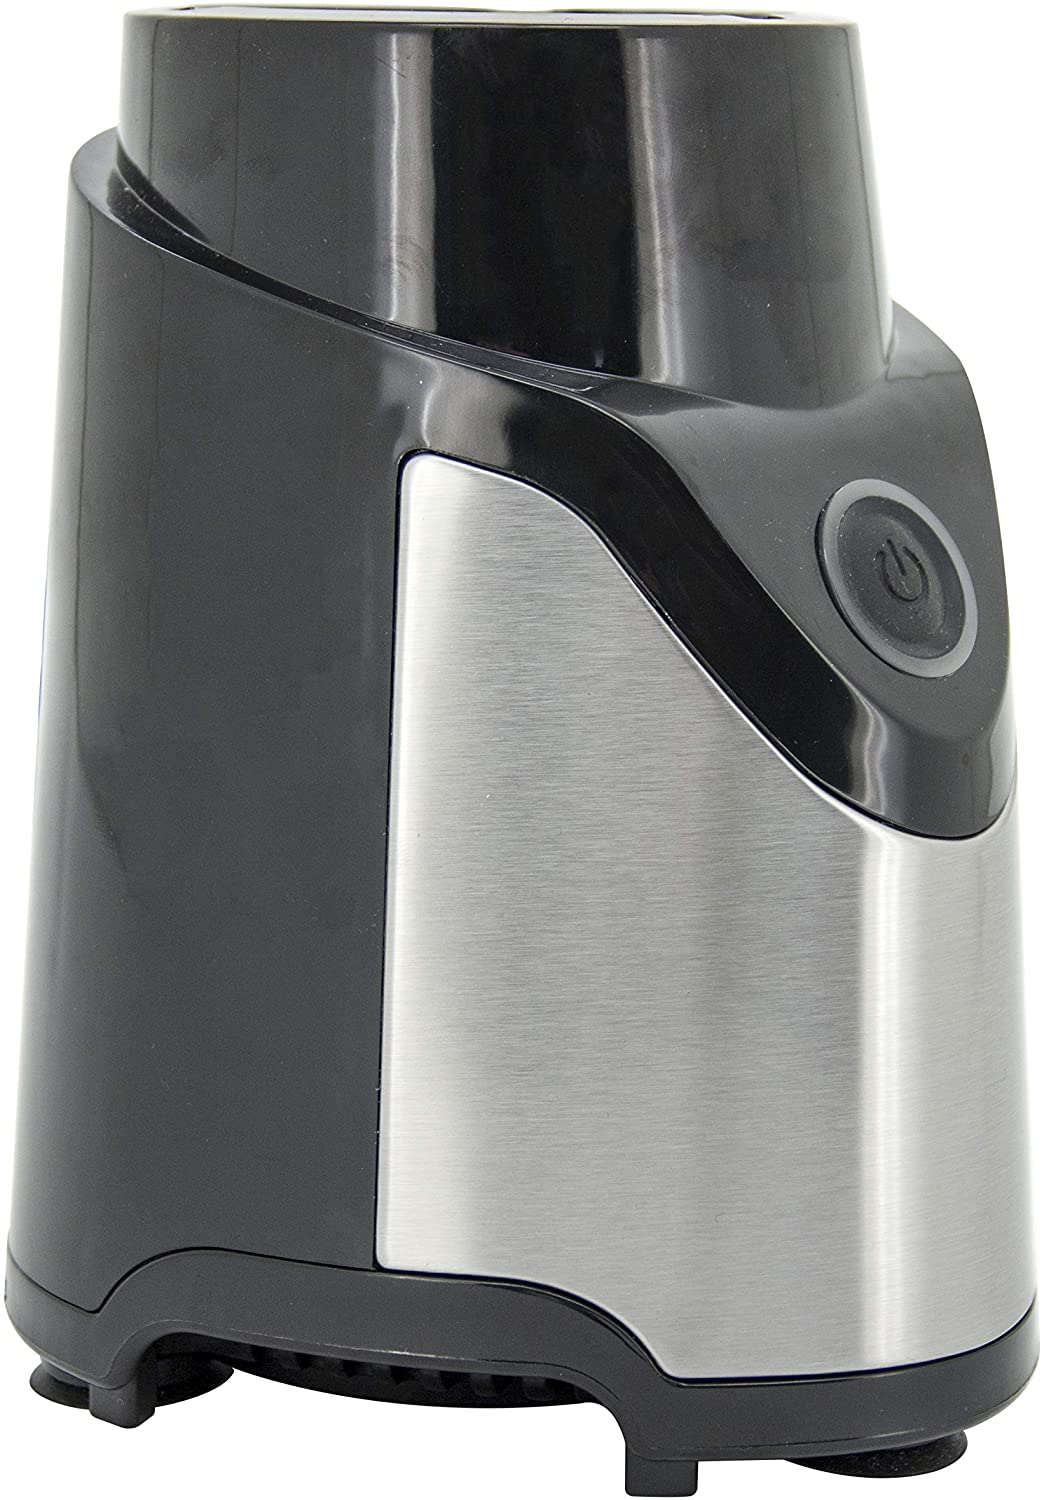 Sonashi Portable Sports Blender/Smoothie maker 300w (silver-black) SB-184